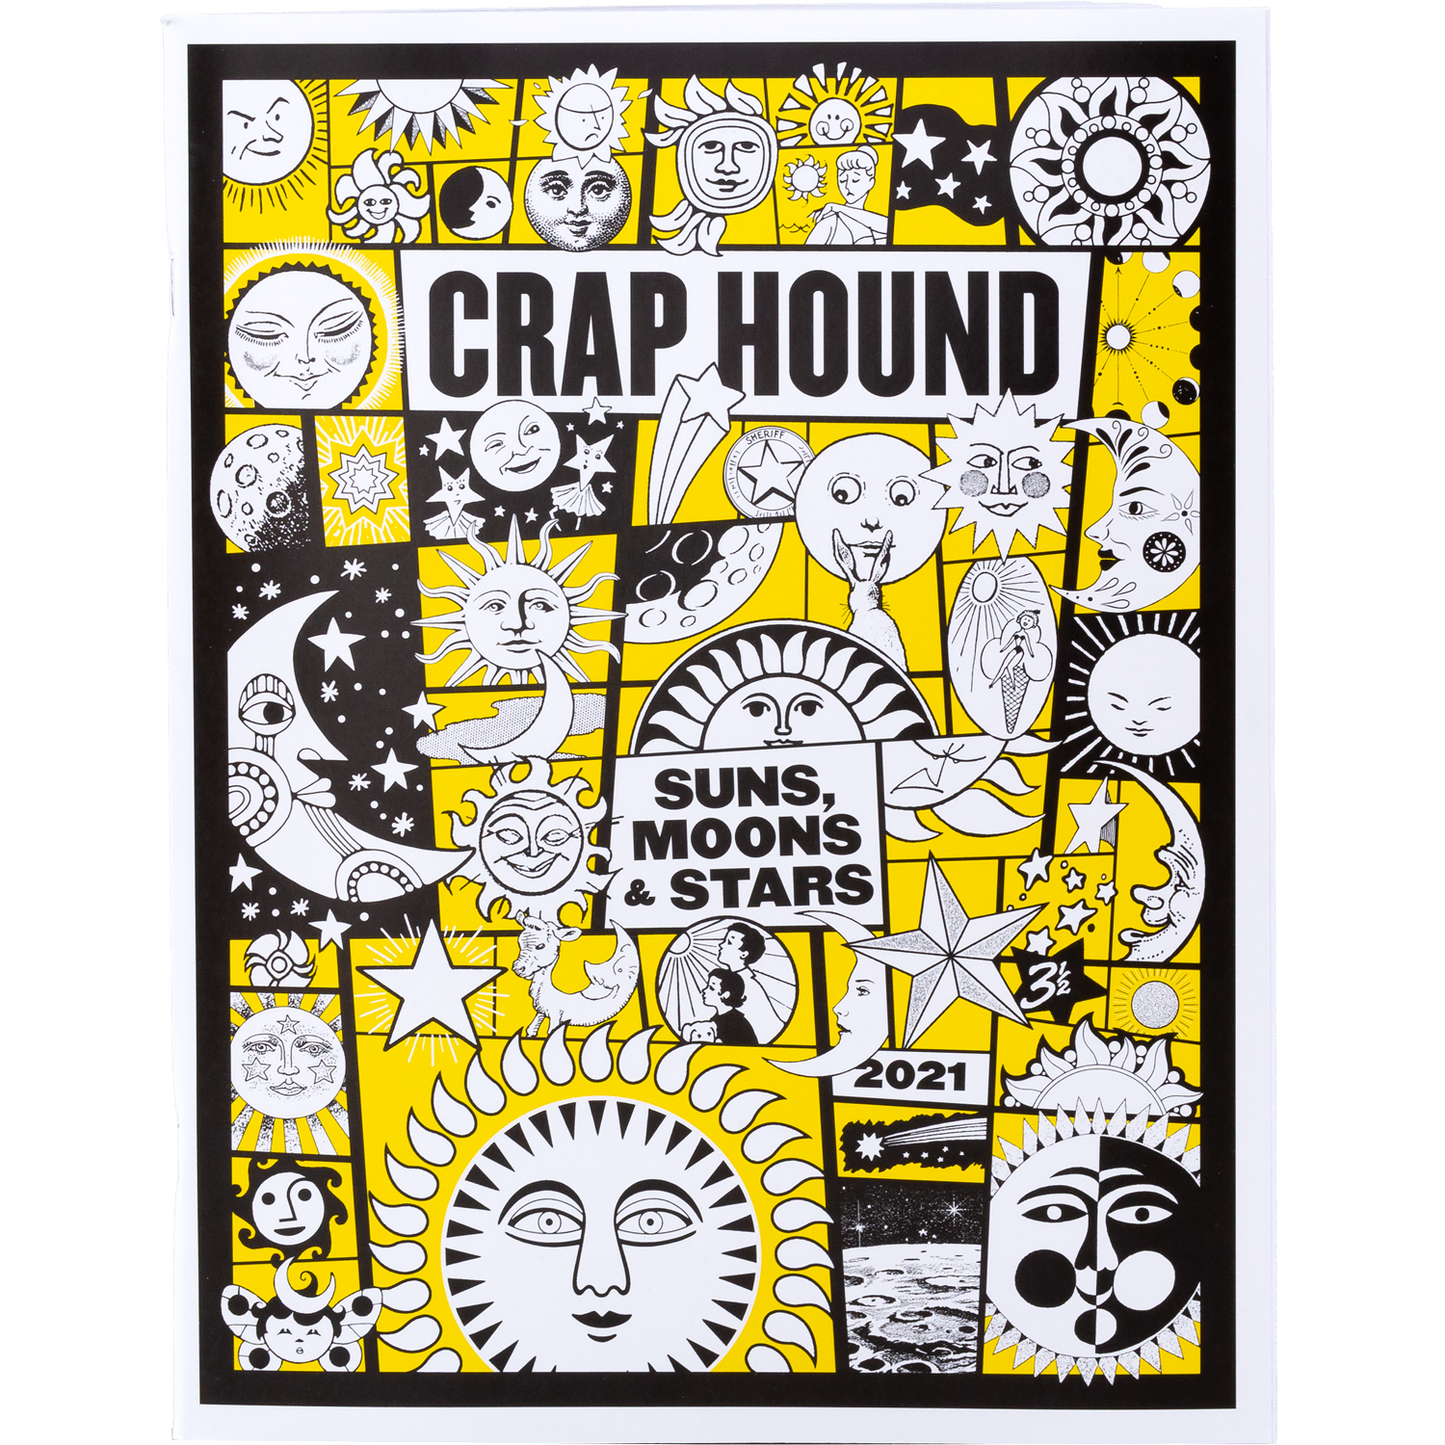 Crap Hound - Suns, Moons & Stars